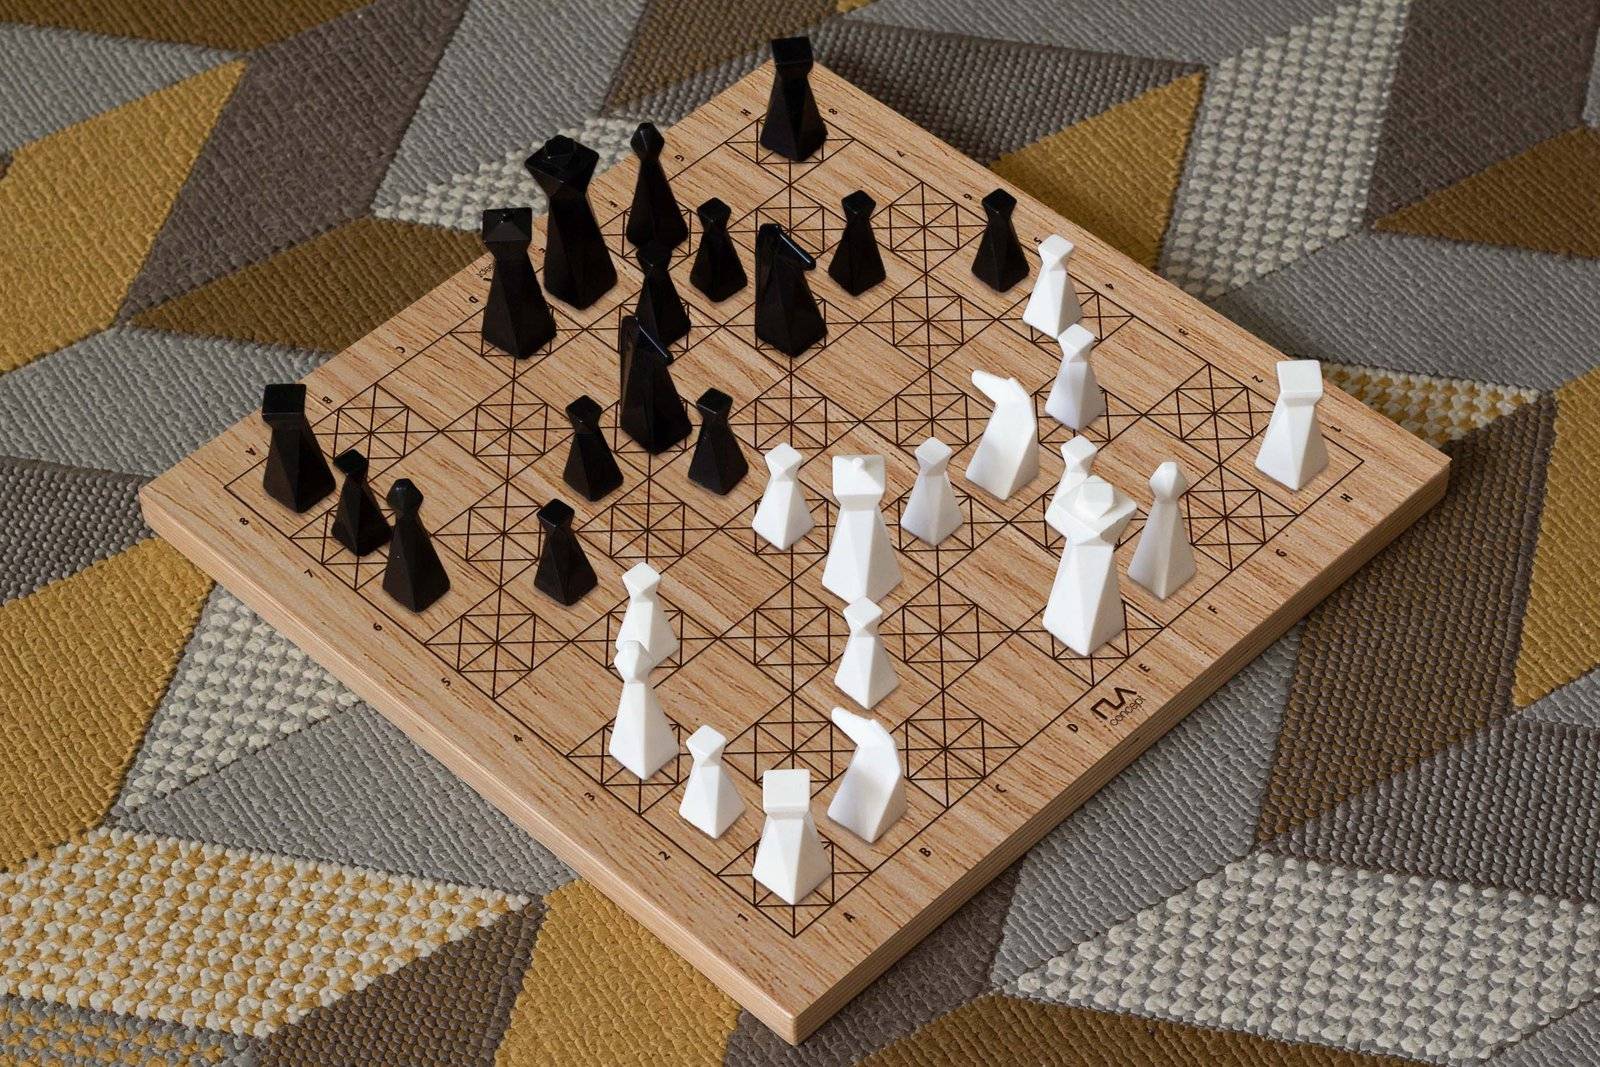 Chess Board Game Brown Felt Bag